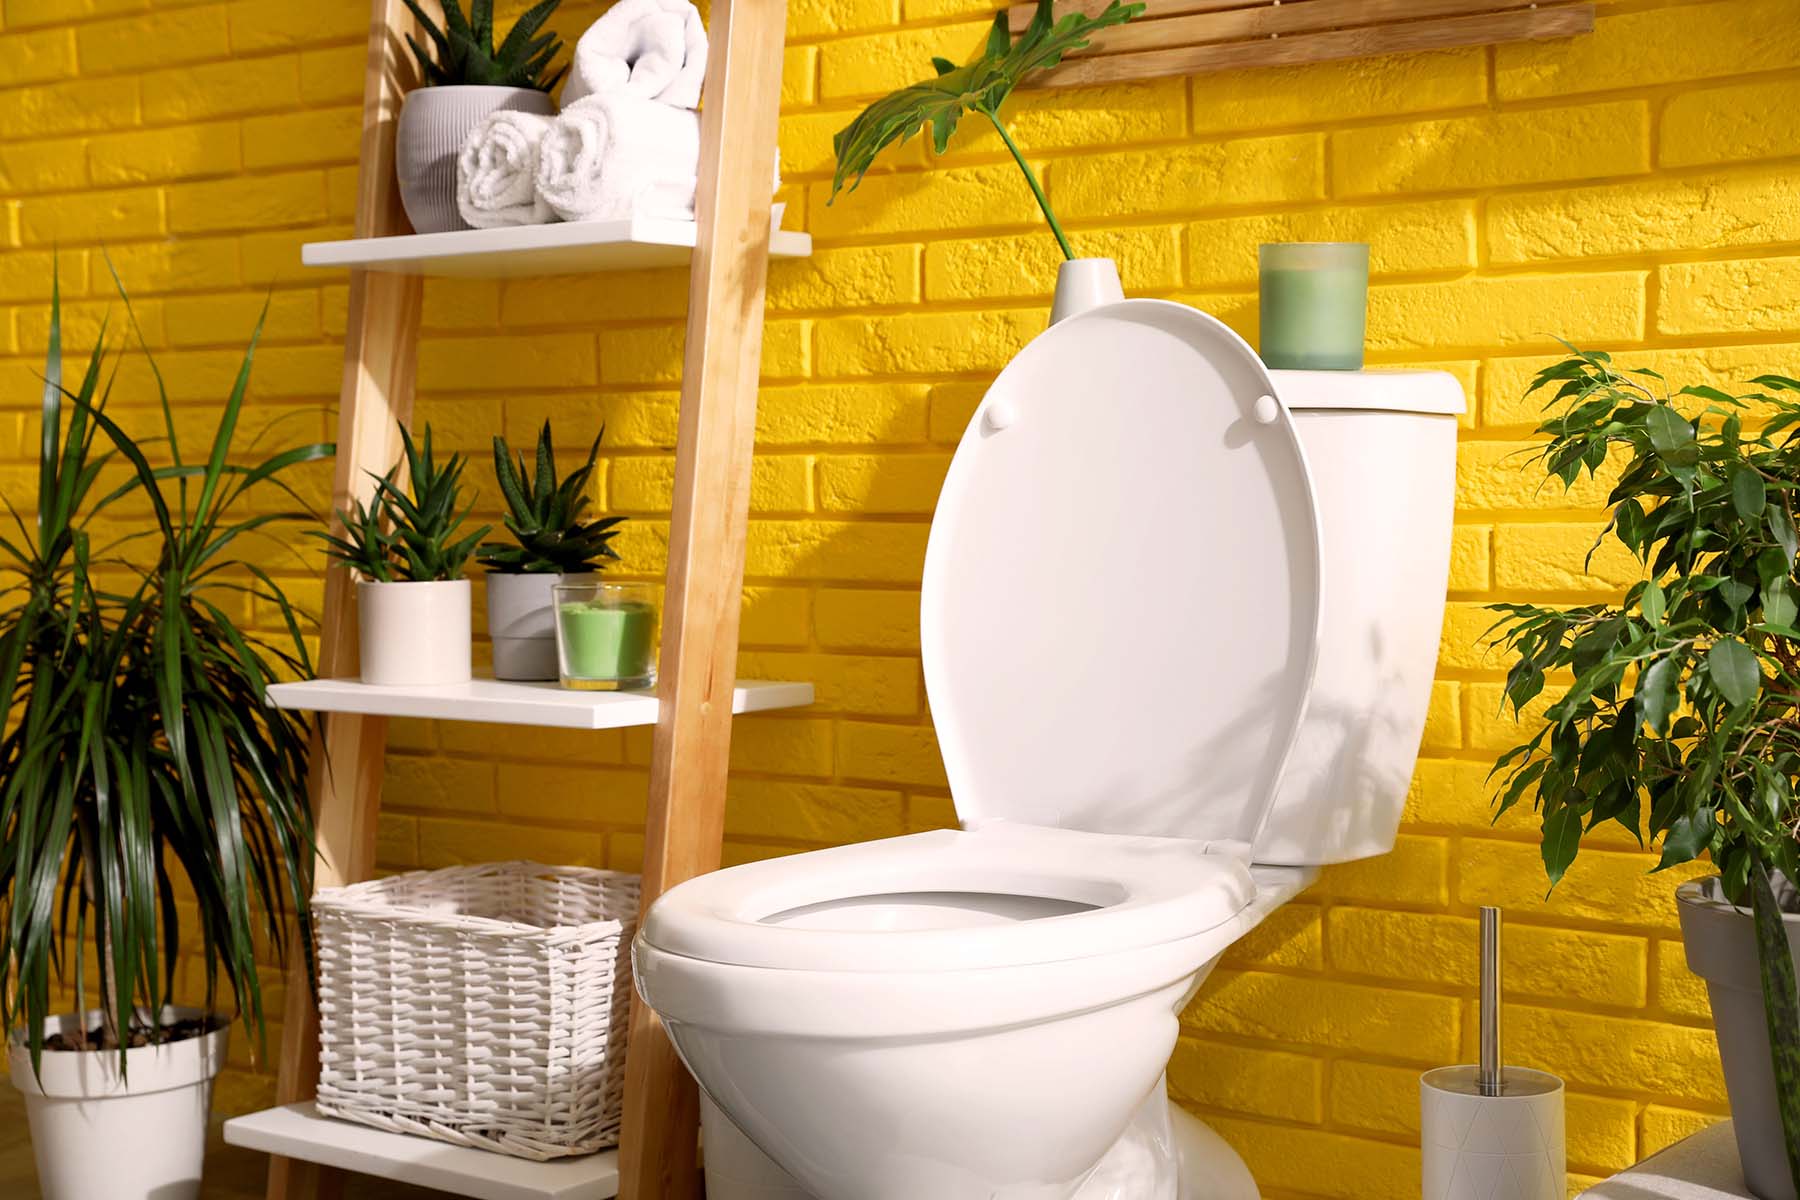 A white toilet against a bright yellow bathroom wall